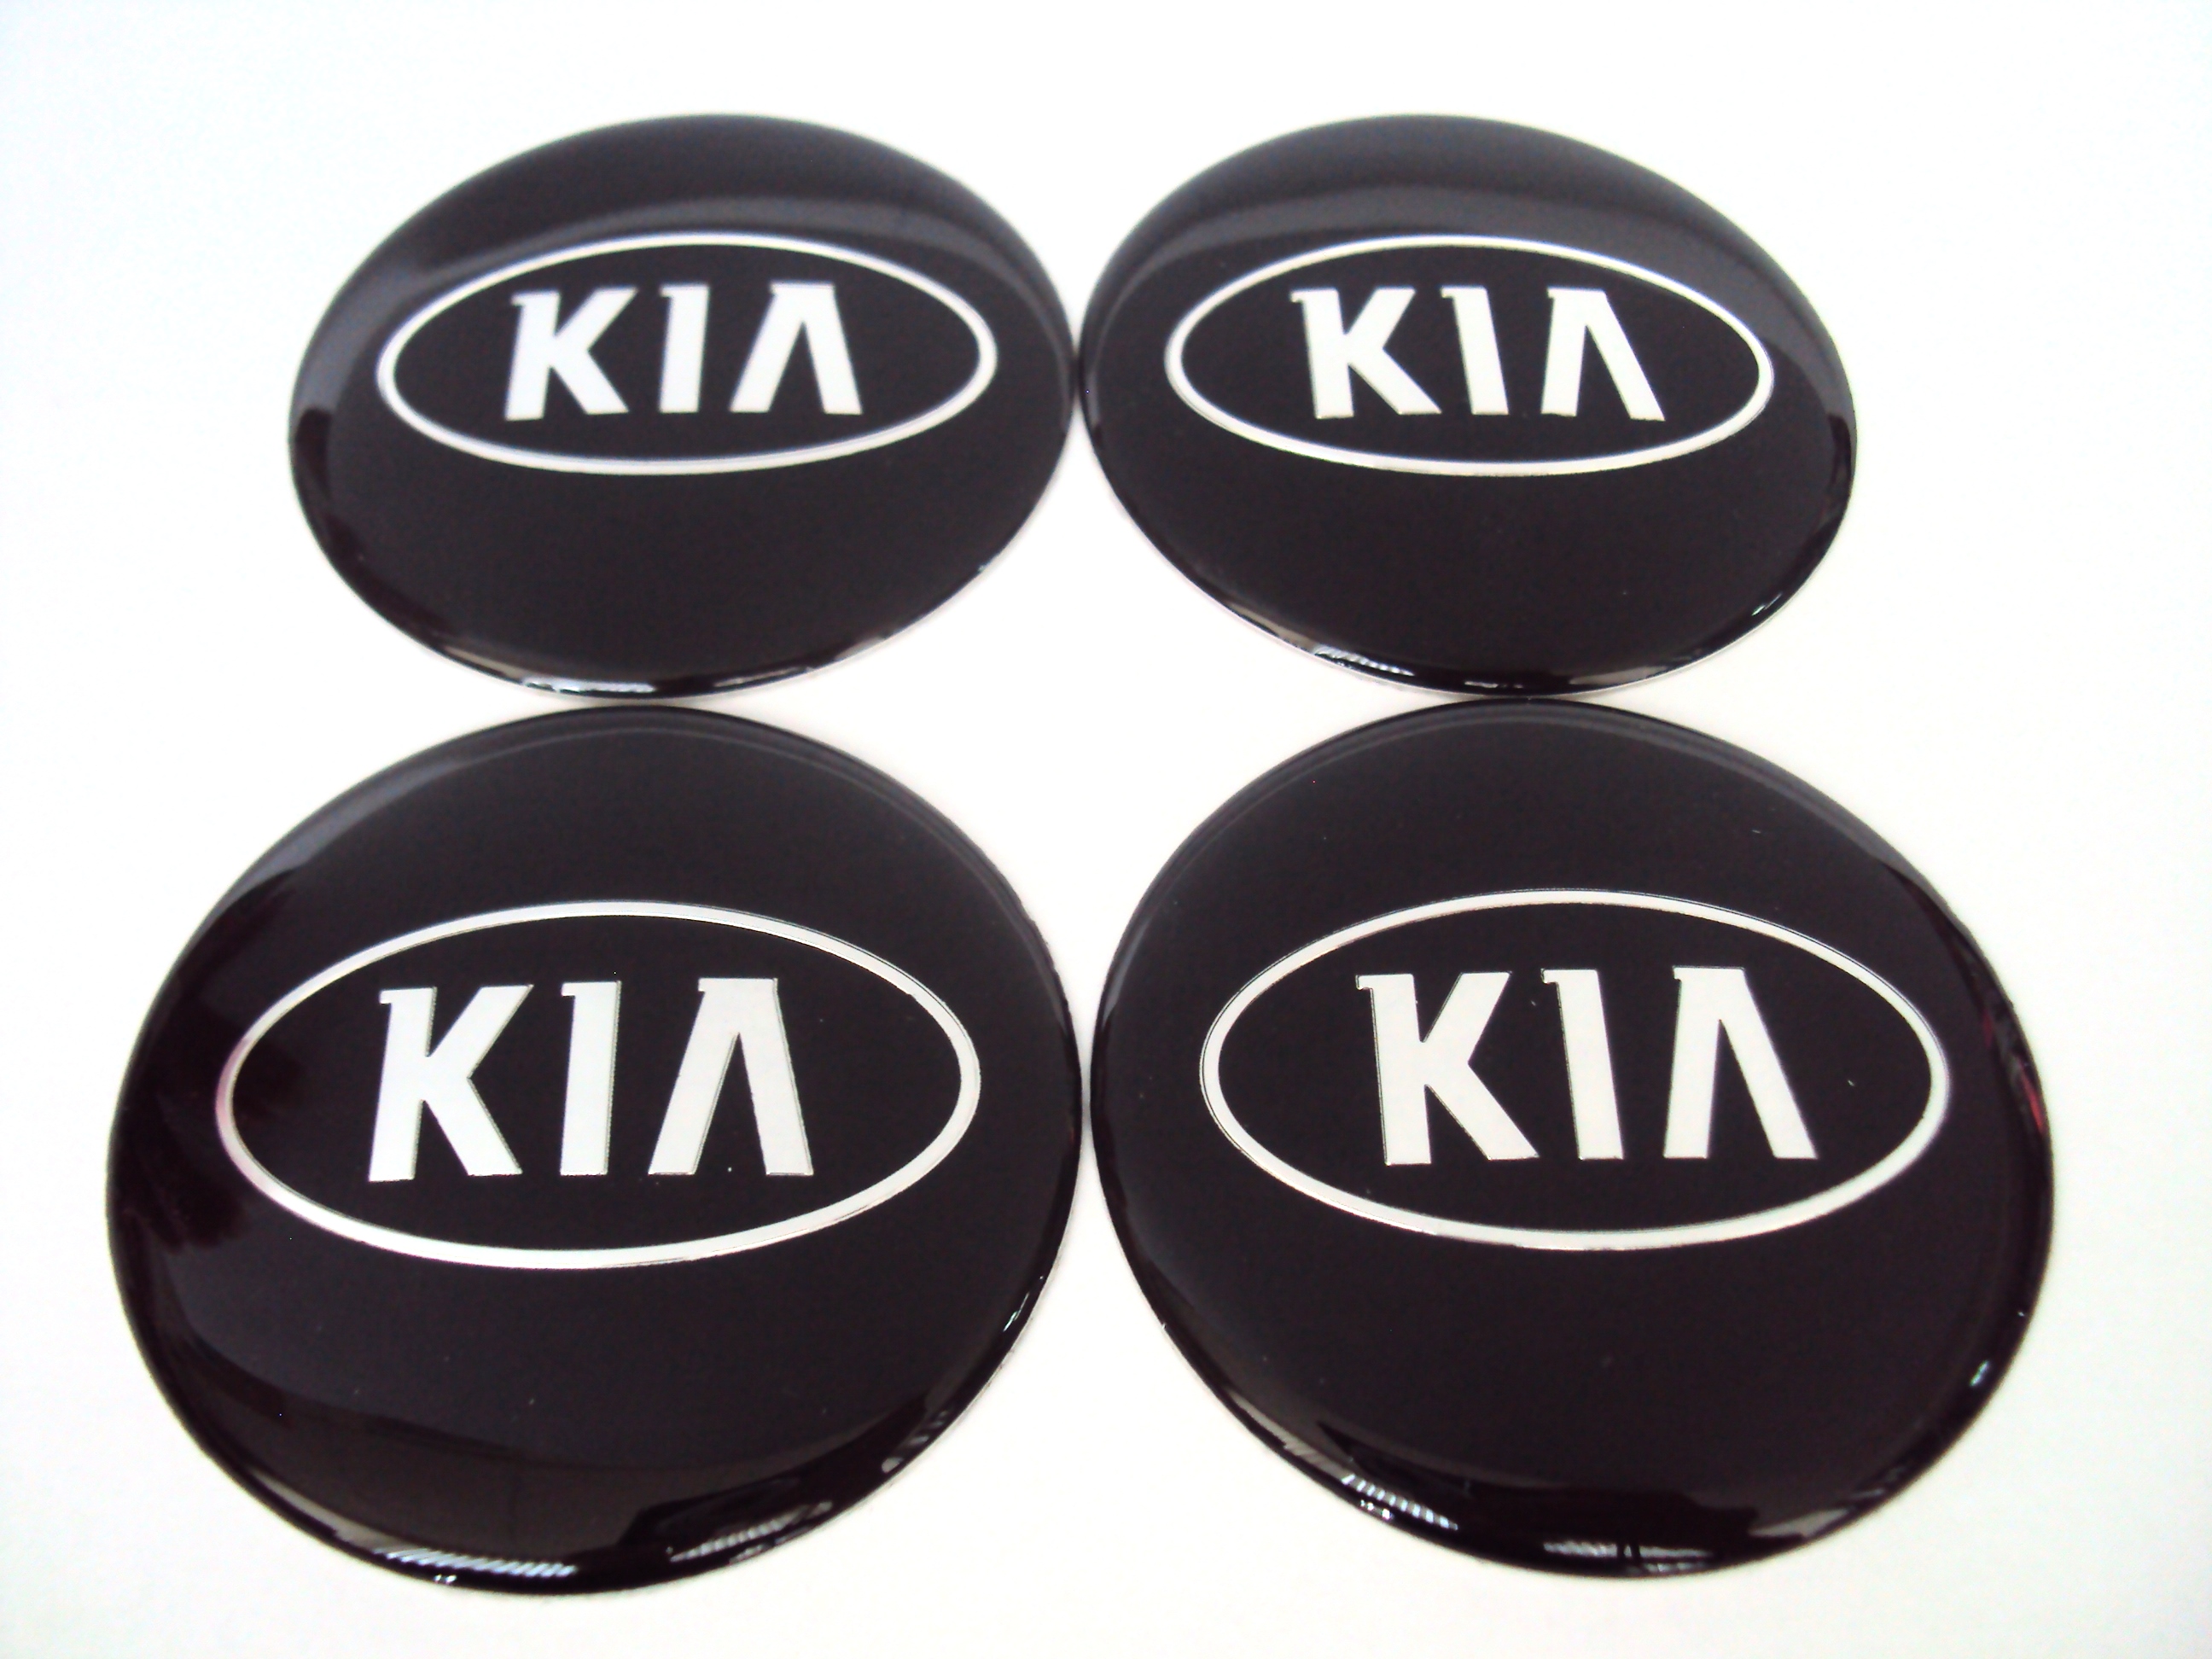 Логотип колпачка на диск. Заглушки на литые диски Kia колпачки в диск Киа. Заглушка литого диска Киа. Заглушка колесного диска 147мм. Заглушка колпачок на литой диск Kia.